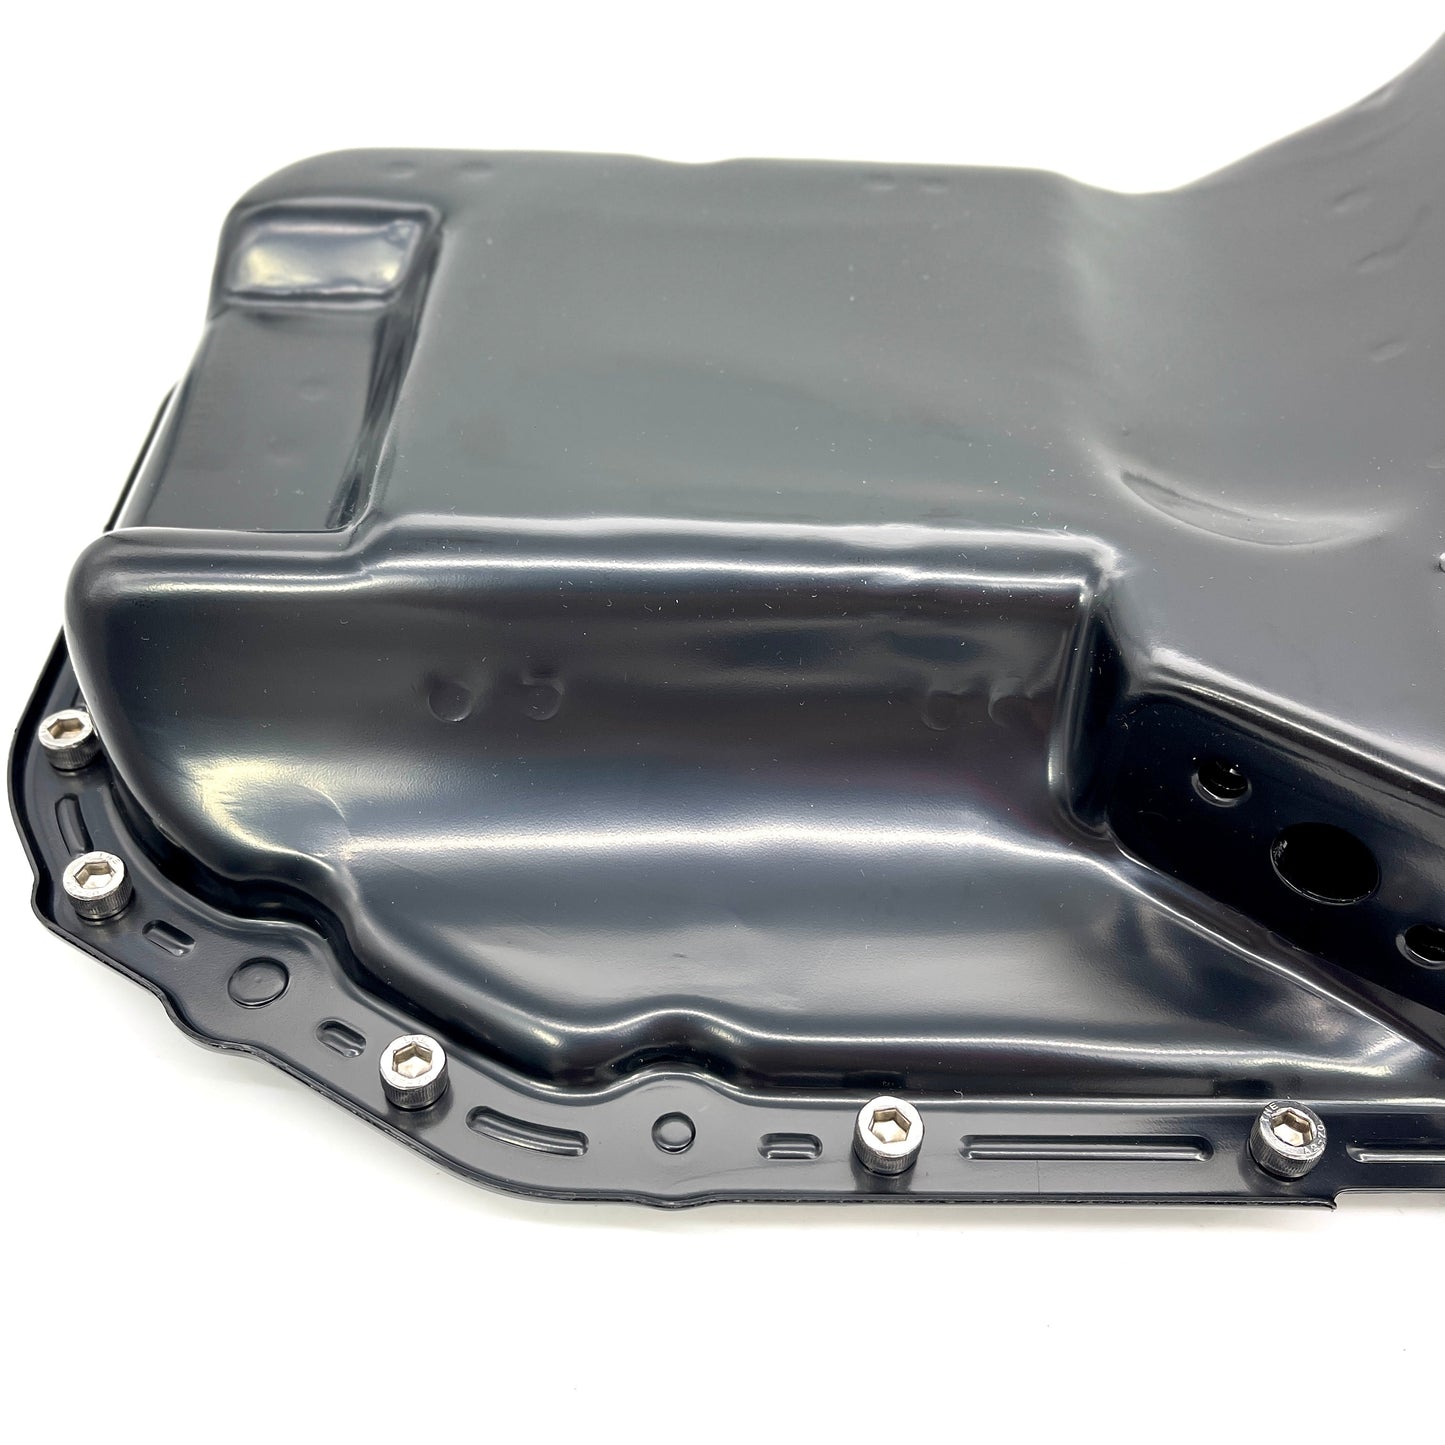 JDC Titanium Oil Pan Hardware Replacement Kit (Evo 4-9/DSM)